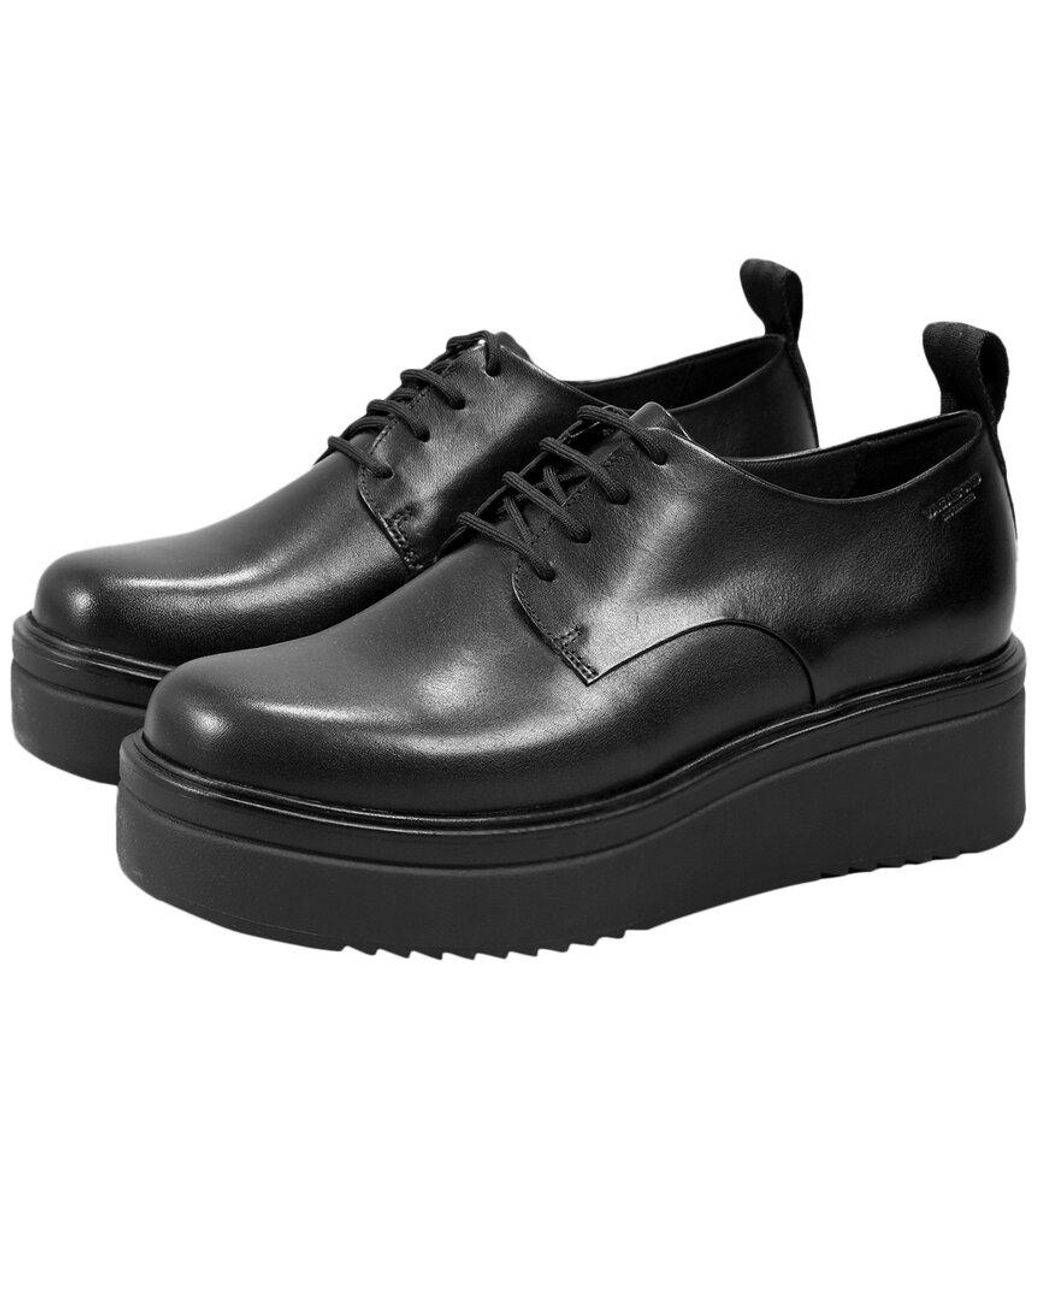 Vagabond Shoemakers Tara Leather Oxford in Black | Lyst